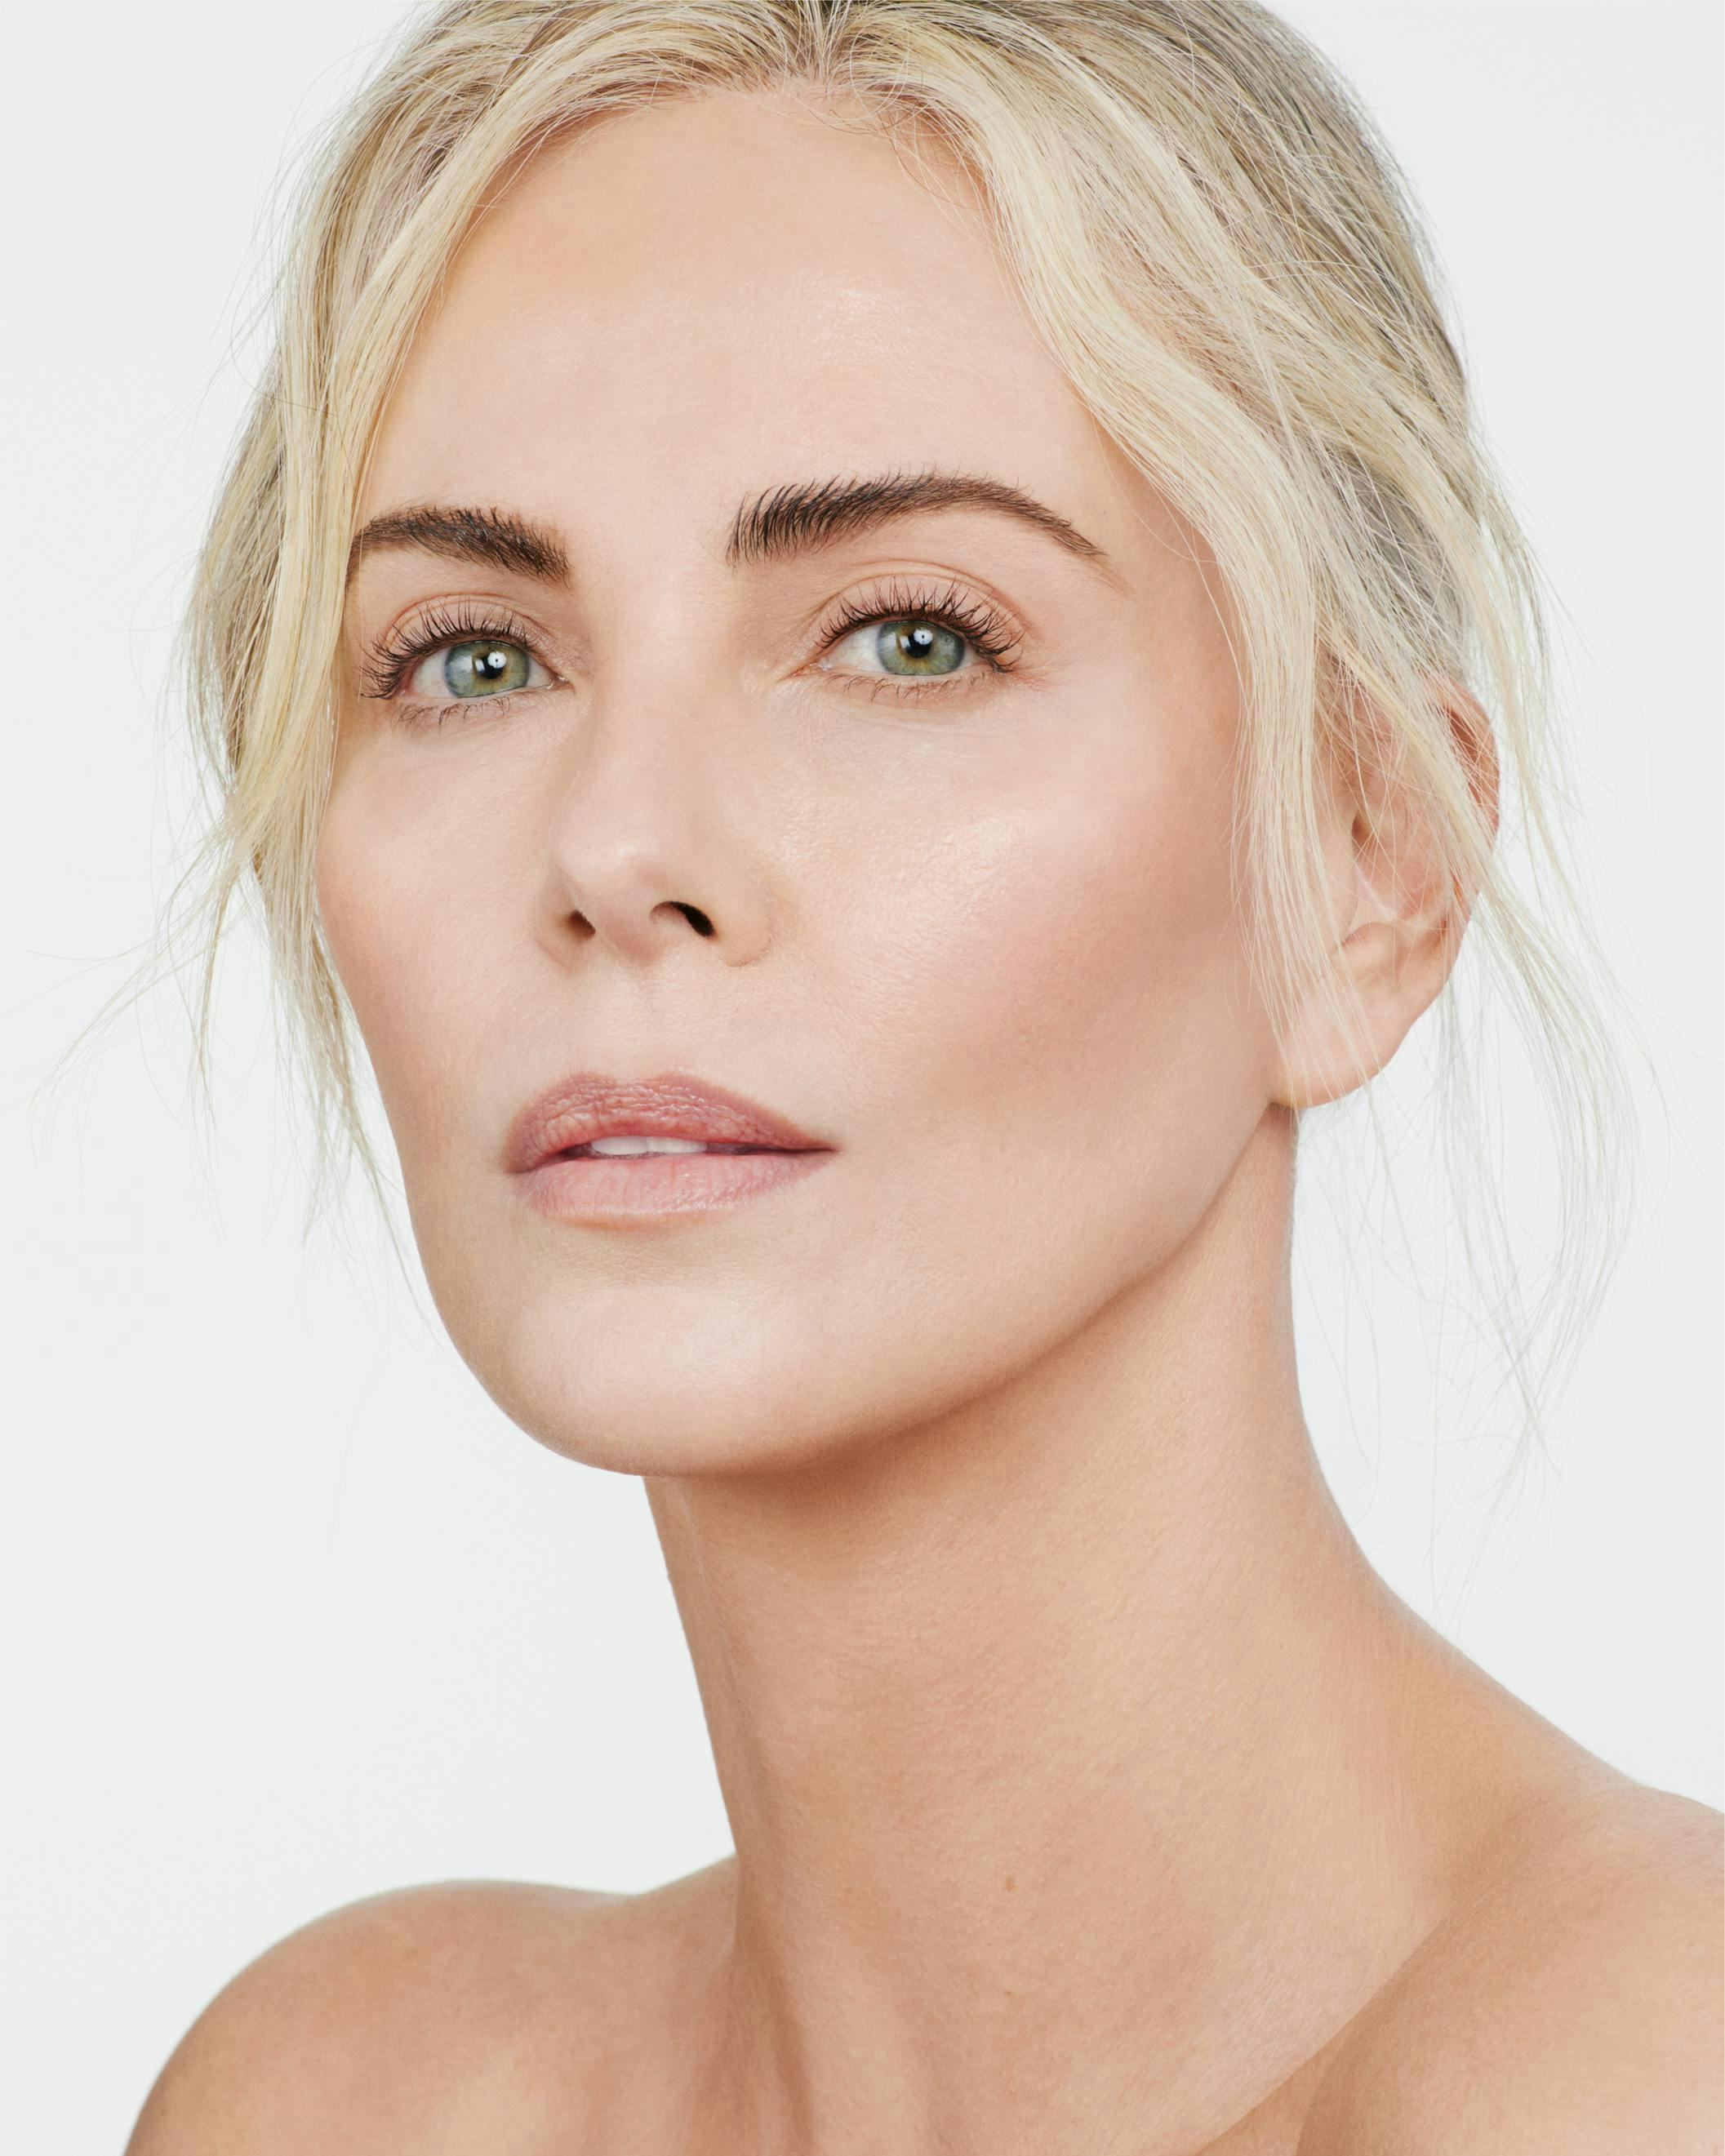 blonde person head face neck photography portrait adult female woman